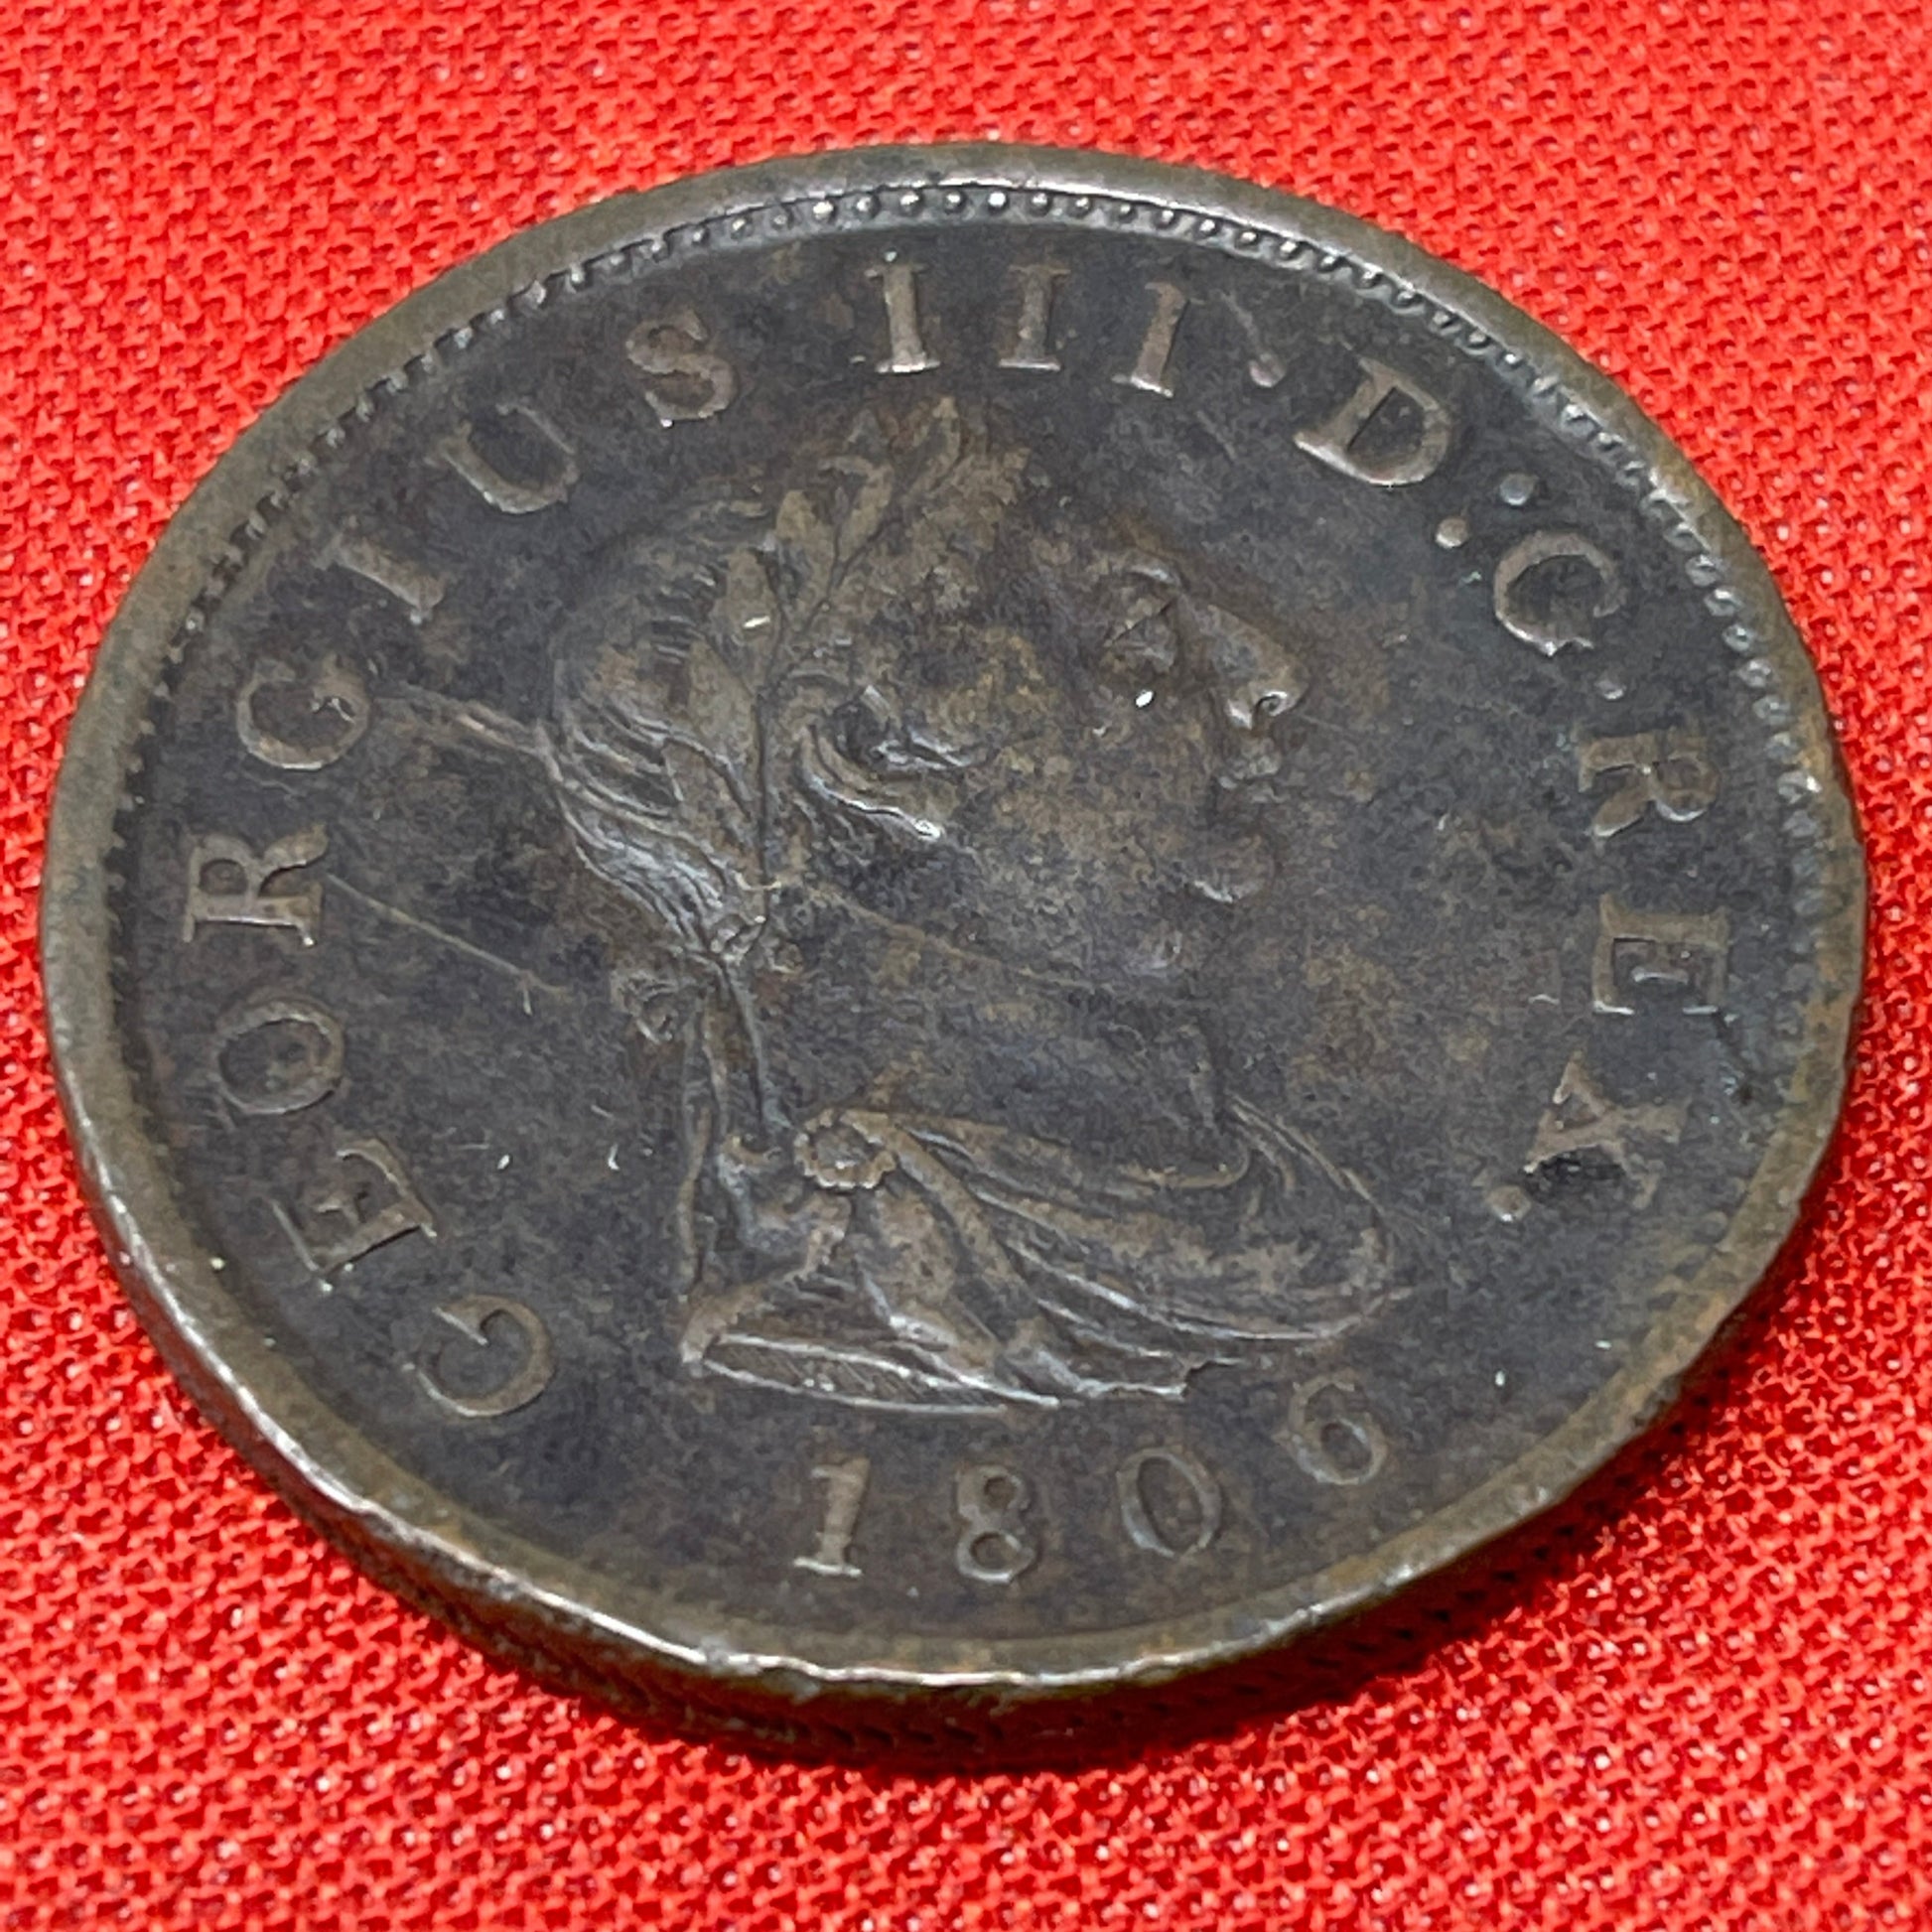 King George III 1806 Penny.